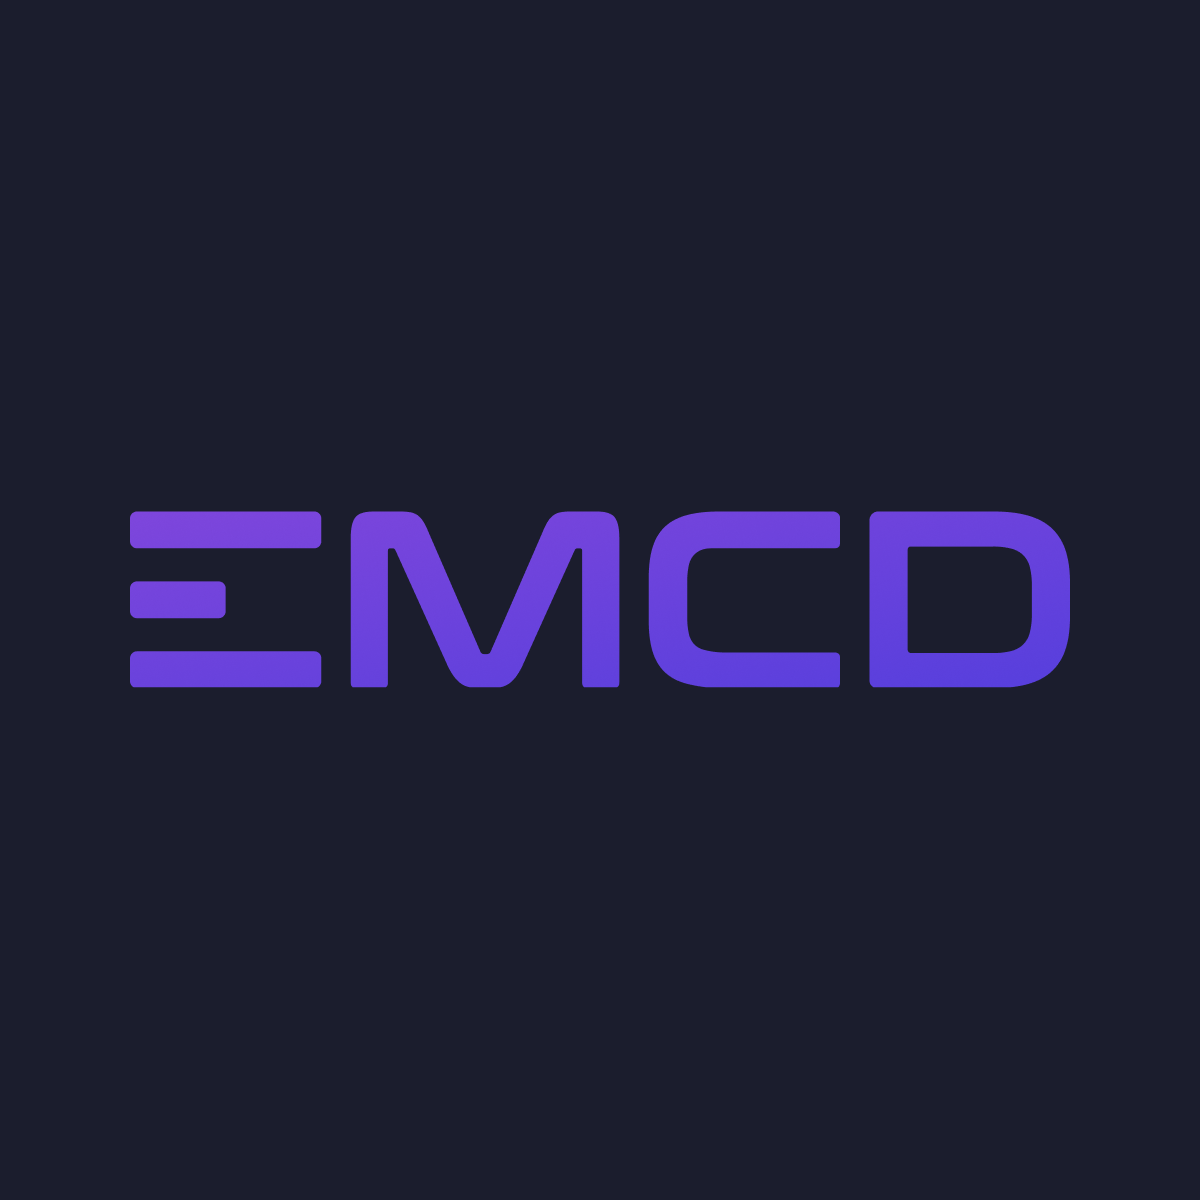 Emcd pool. EMCD. EMCD пул. EMCD майнинг пул. Иконка EMCD.